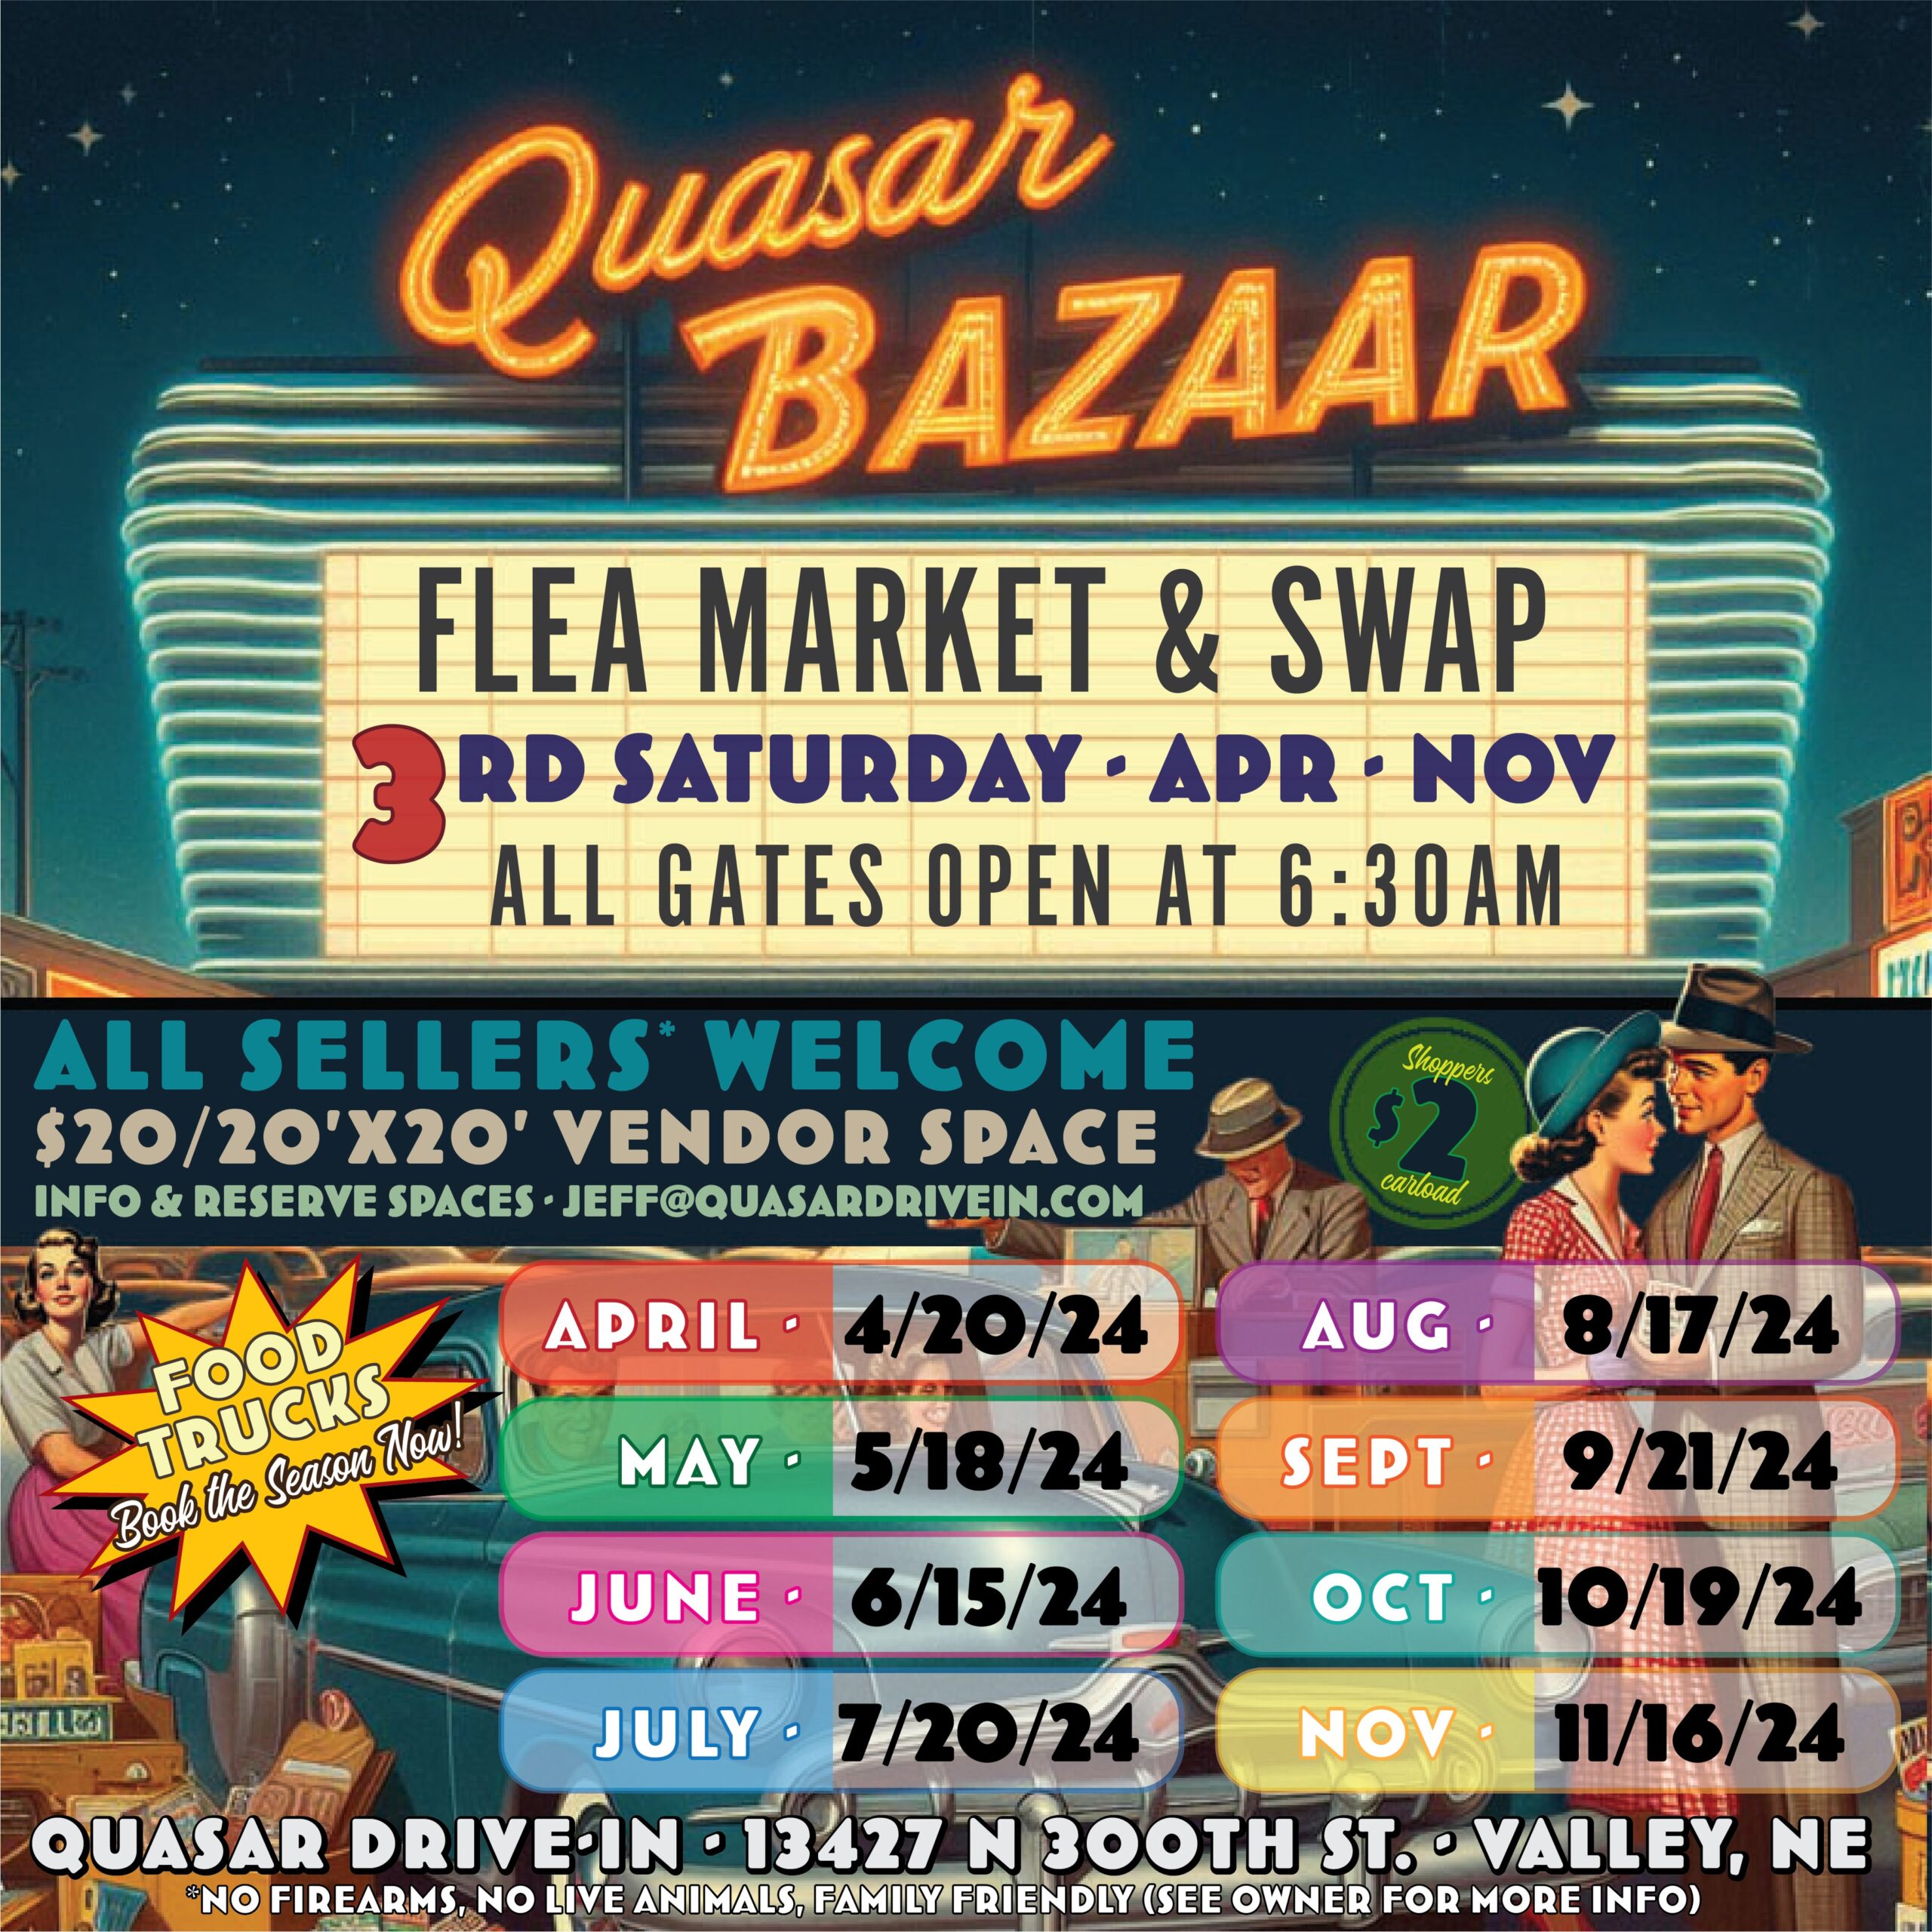 Quasar Bazaar, 3rd Saturday, April through November. Gates open at 6:30 AM.